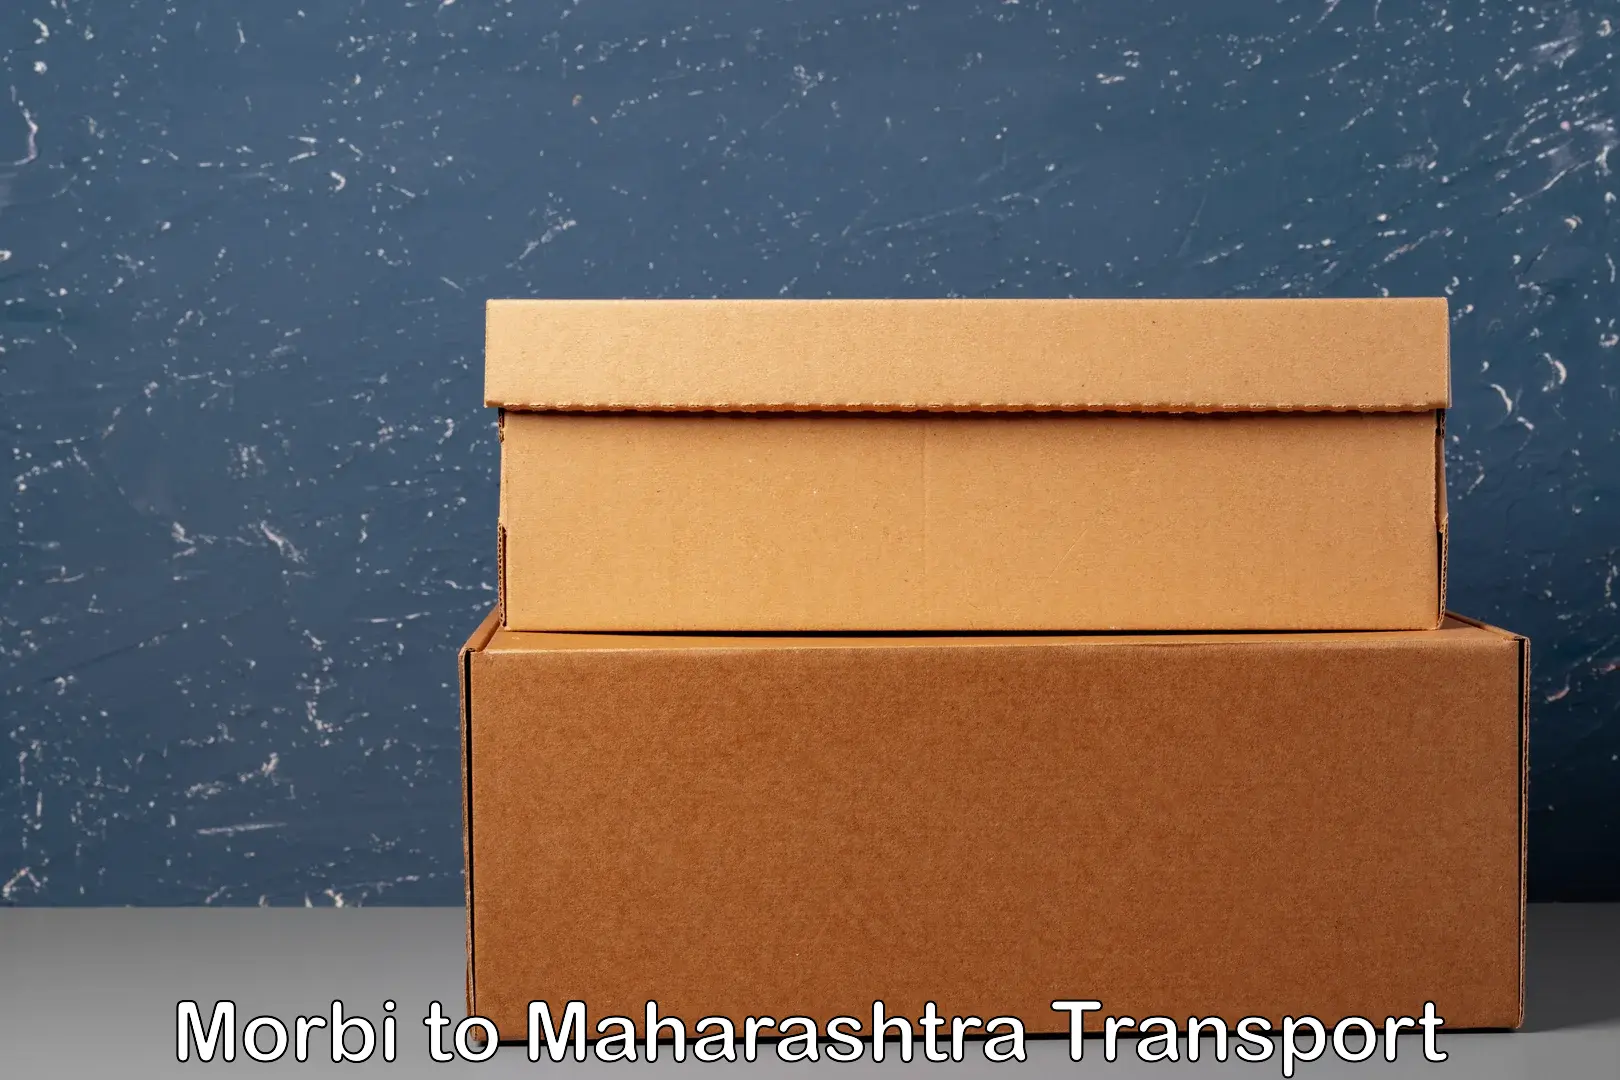 Sending bike to another city Morbi to Shrirampur